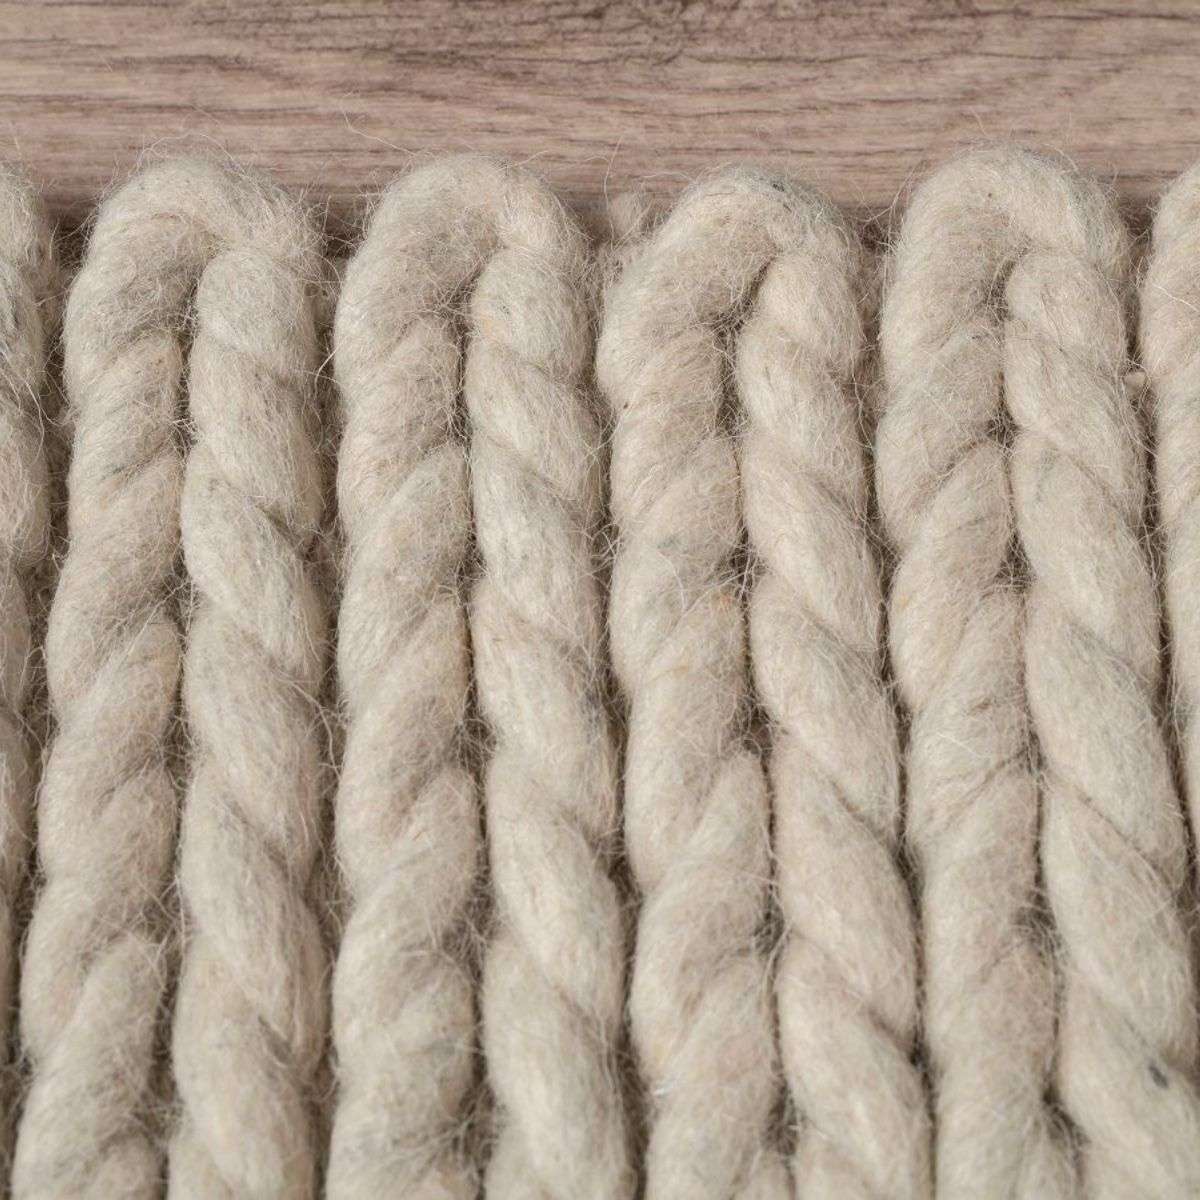 Charlotte Braided Wool Rug - Large - Natural Marle